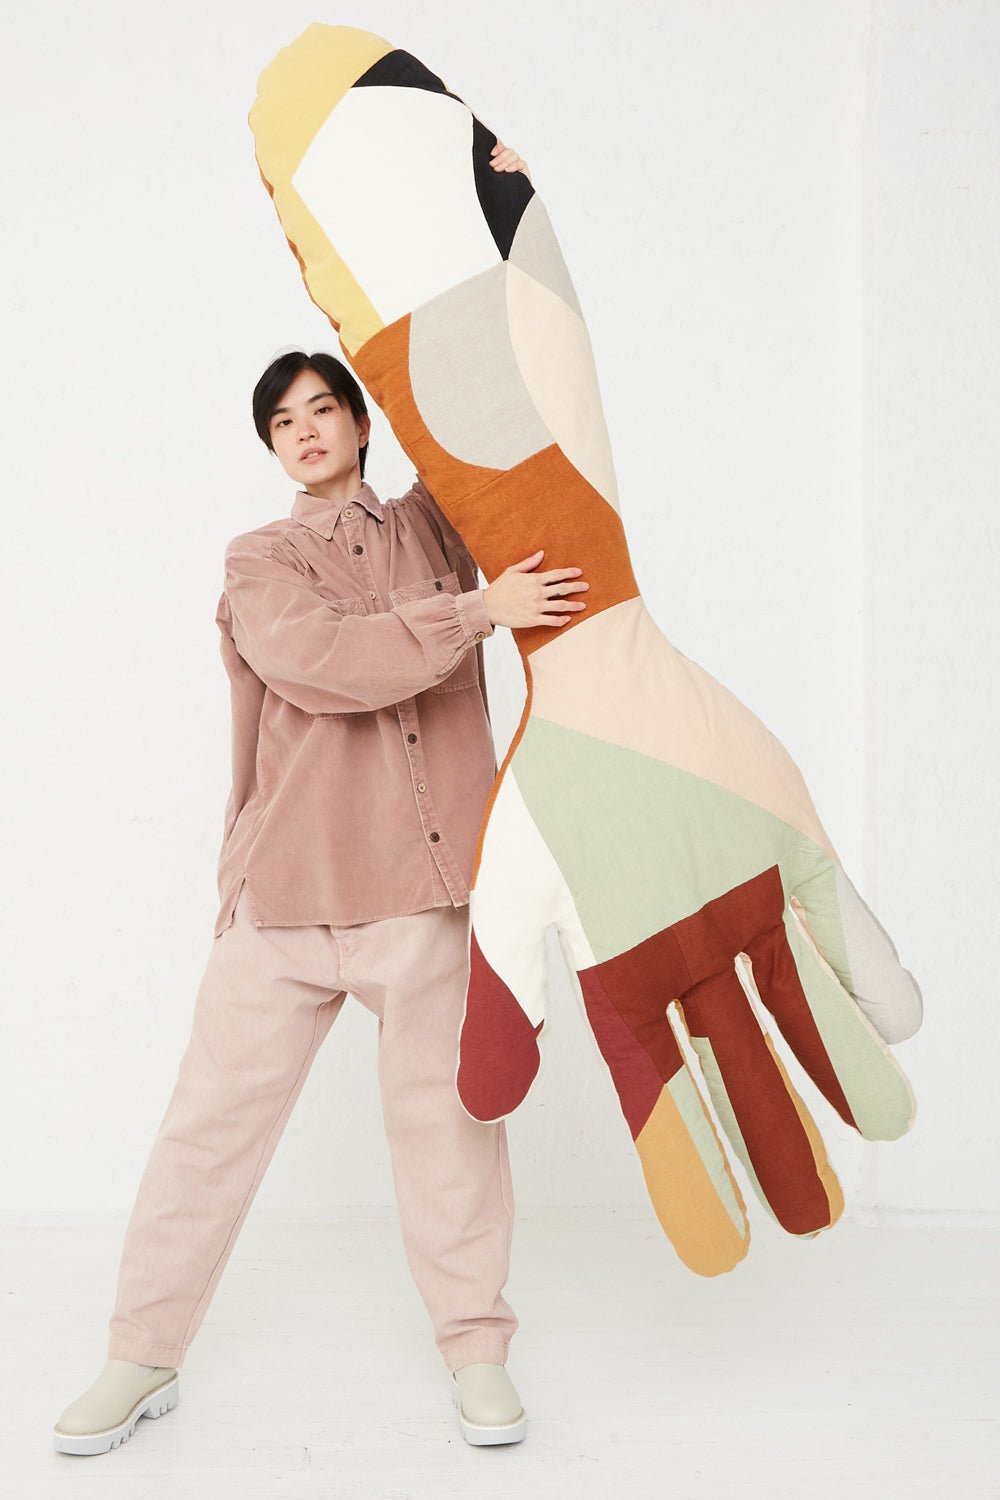 Wiener Times Sophie Taeuber-Arp Bolster Giant Hand Variation I